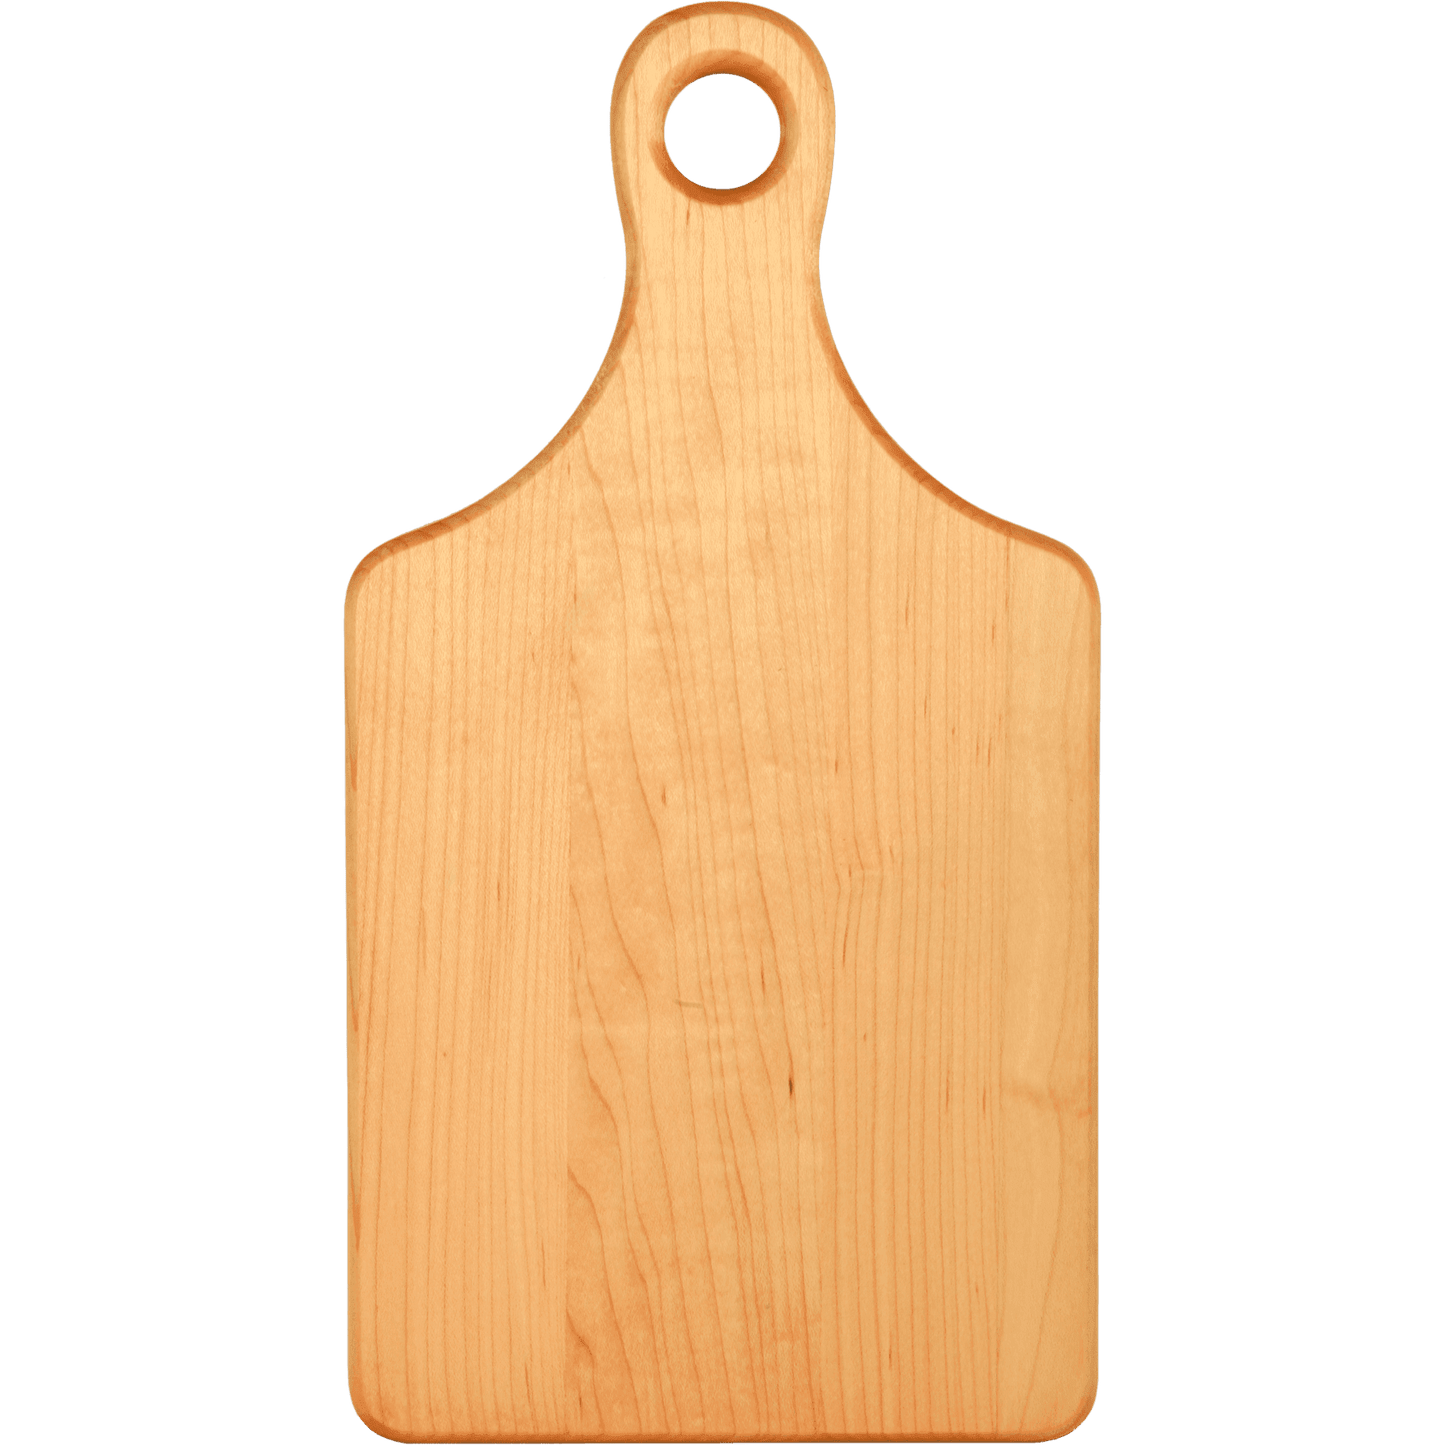 Maple Paddle Shaped Cutting Board - 13 1/2" x 7"